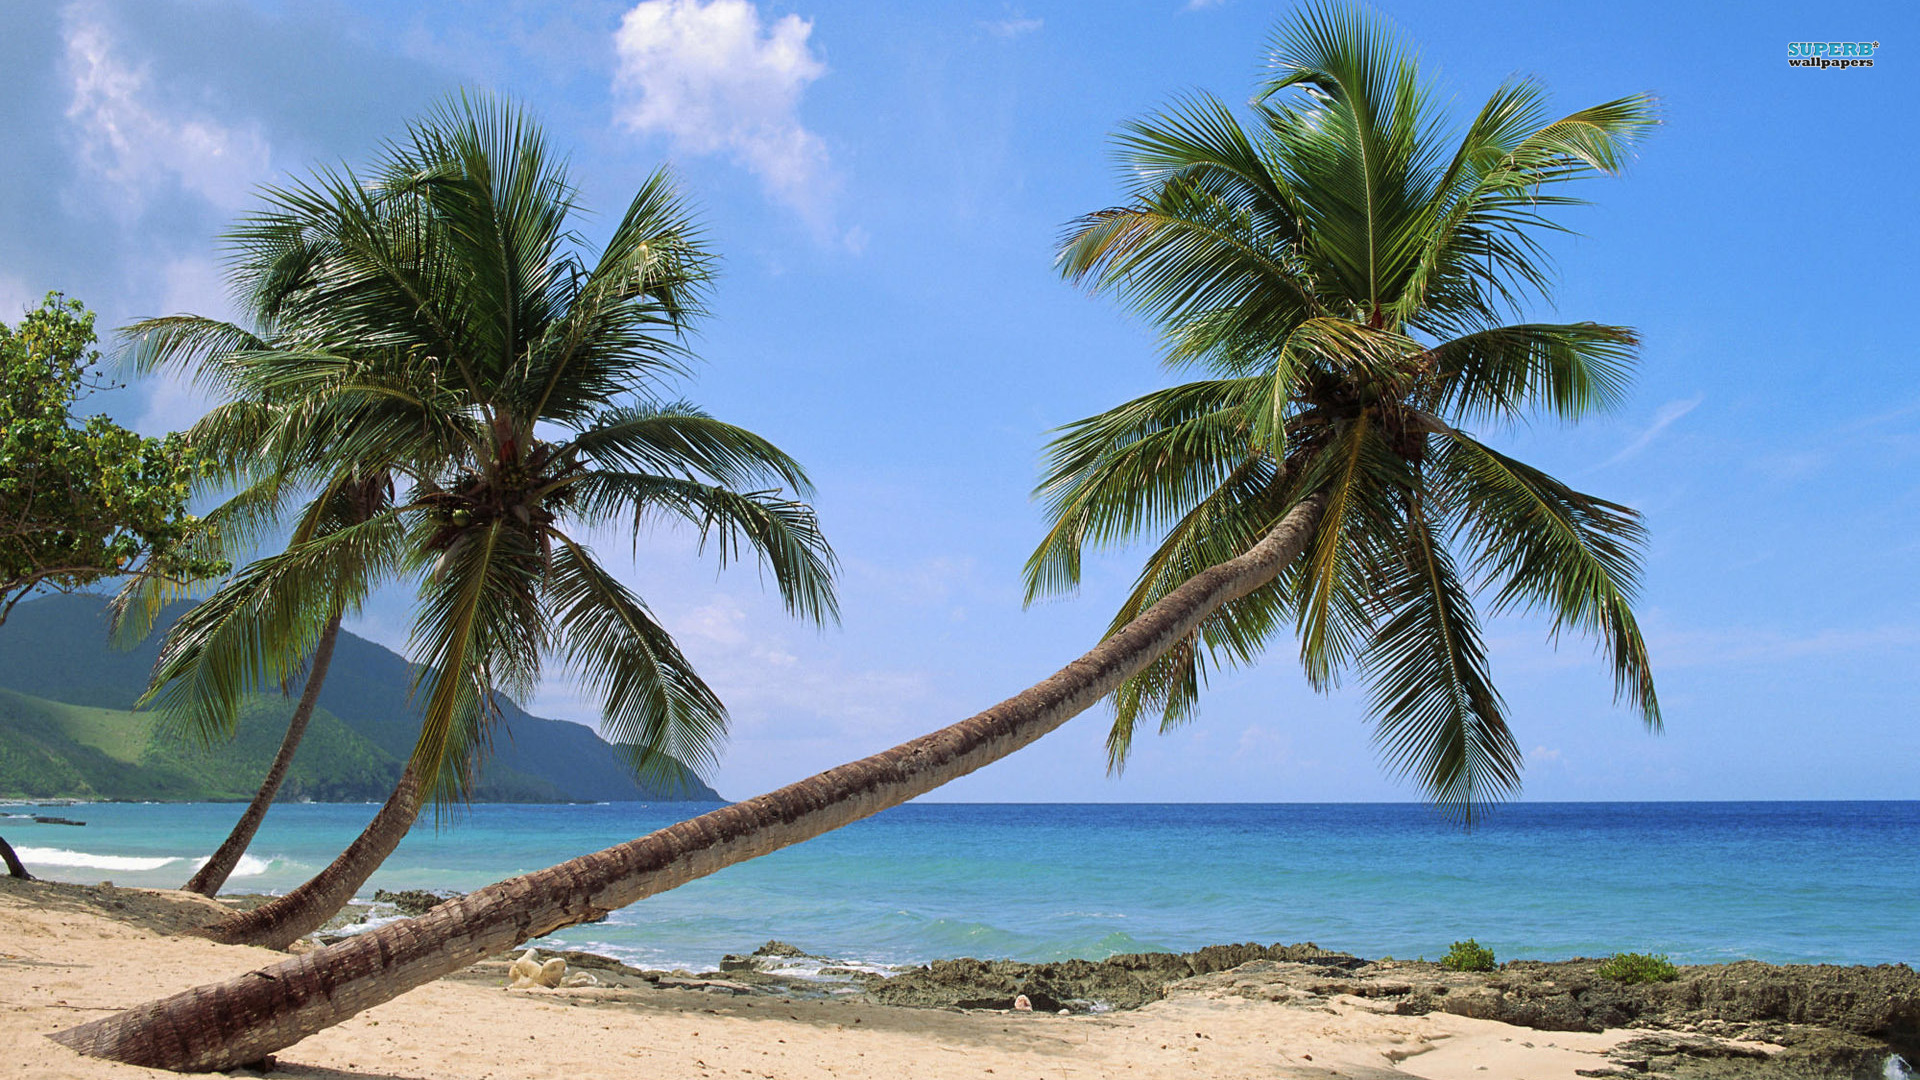 goa beach wallpaper,tree,tropics,palm tree,arecales,caribbean